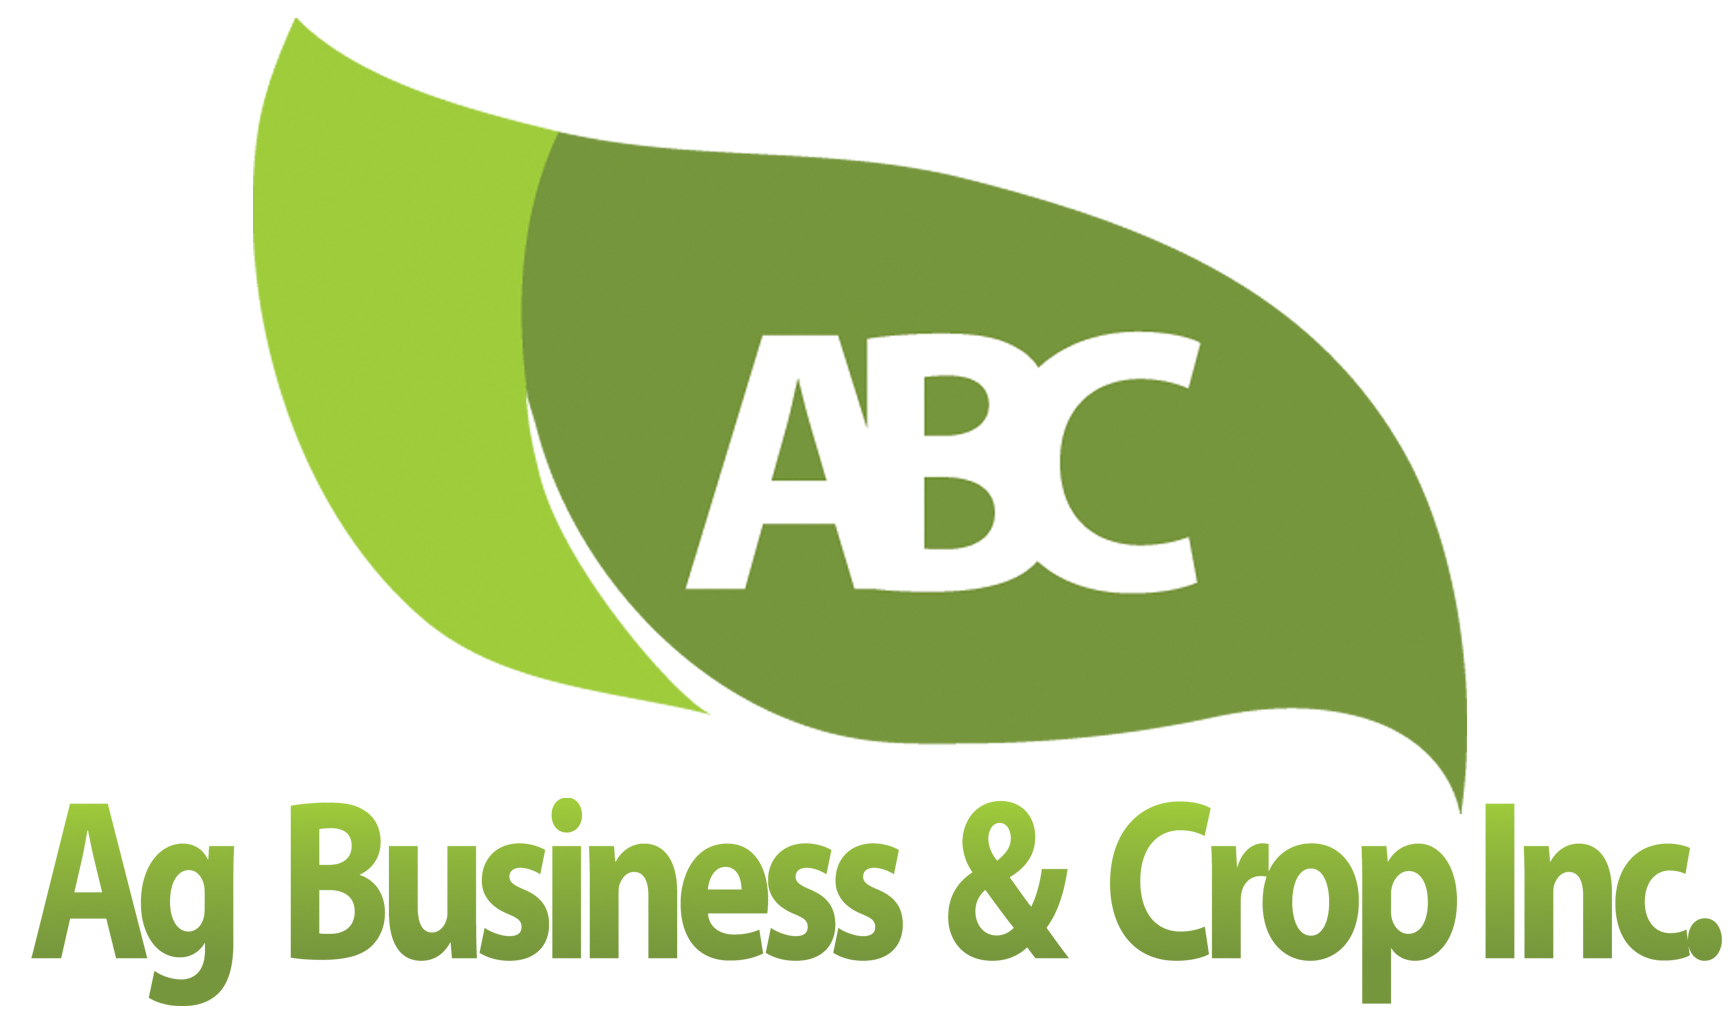 Ag Business & Crop Inc. Logo